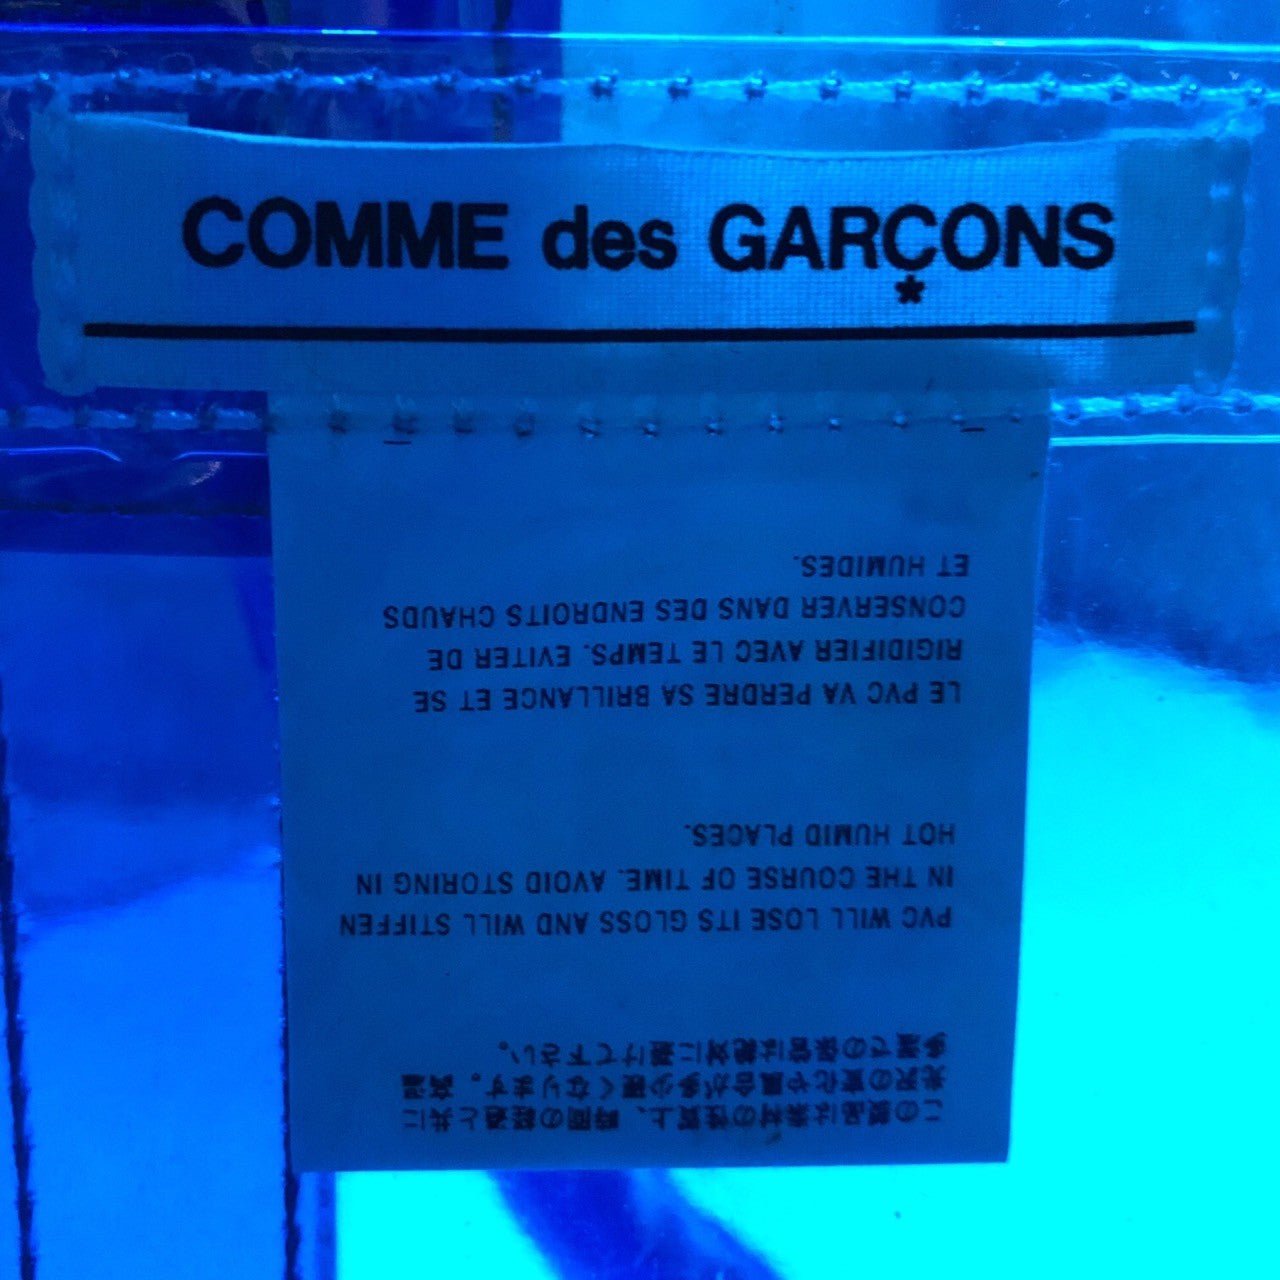 COMME des GARCONS(コムデギャルソン) clear school bag クリア スクール バッグ CO-K 001 ブルー 半透明 ハンドバッグ 塩化ビニール アーカイブ